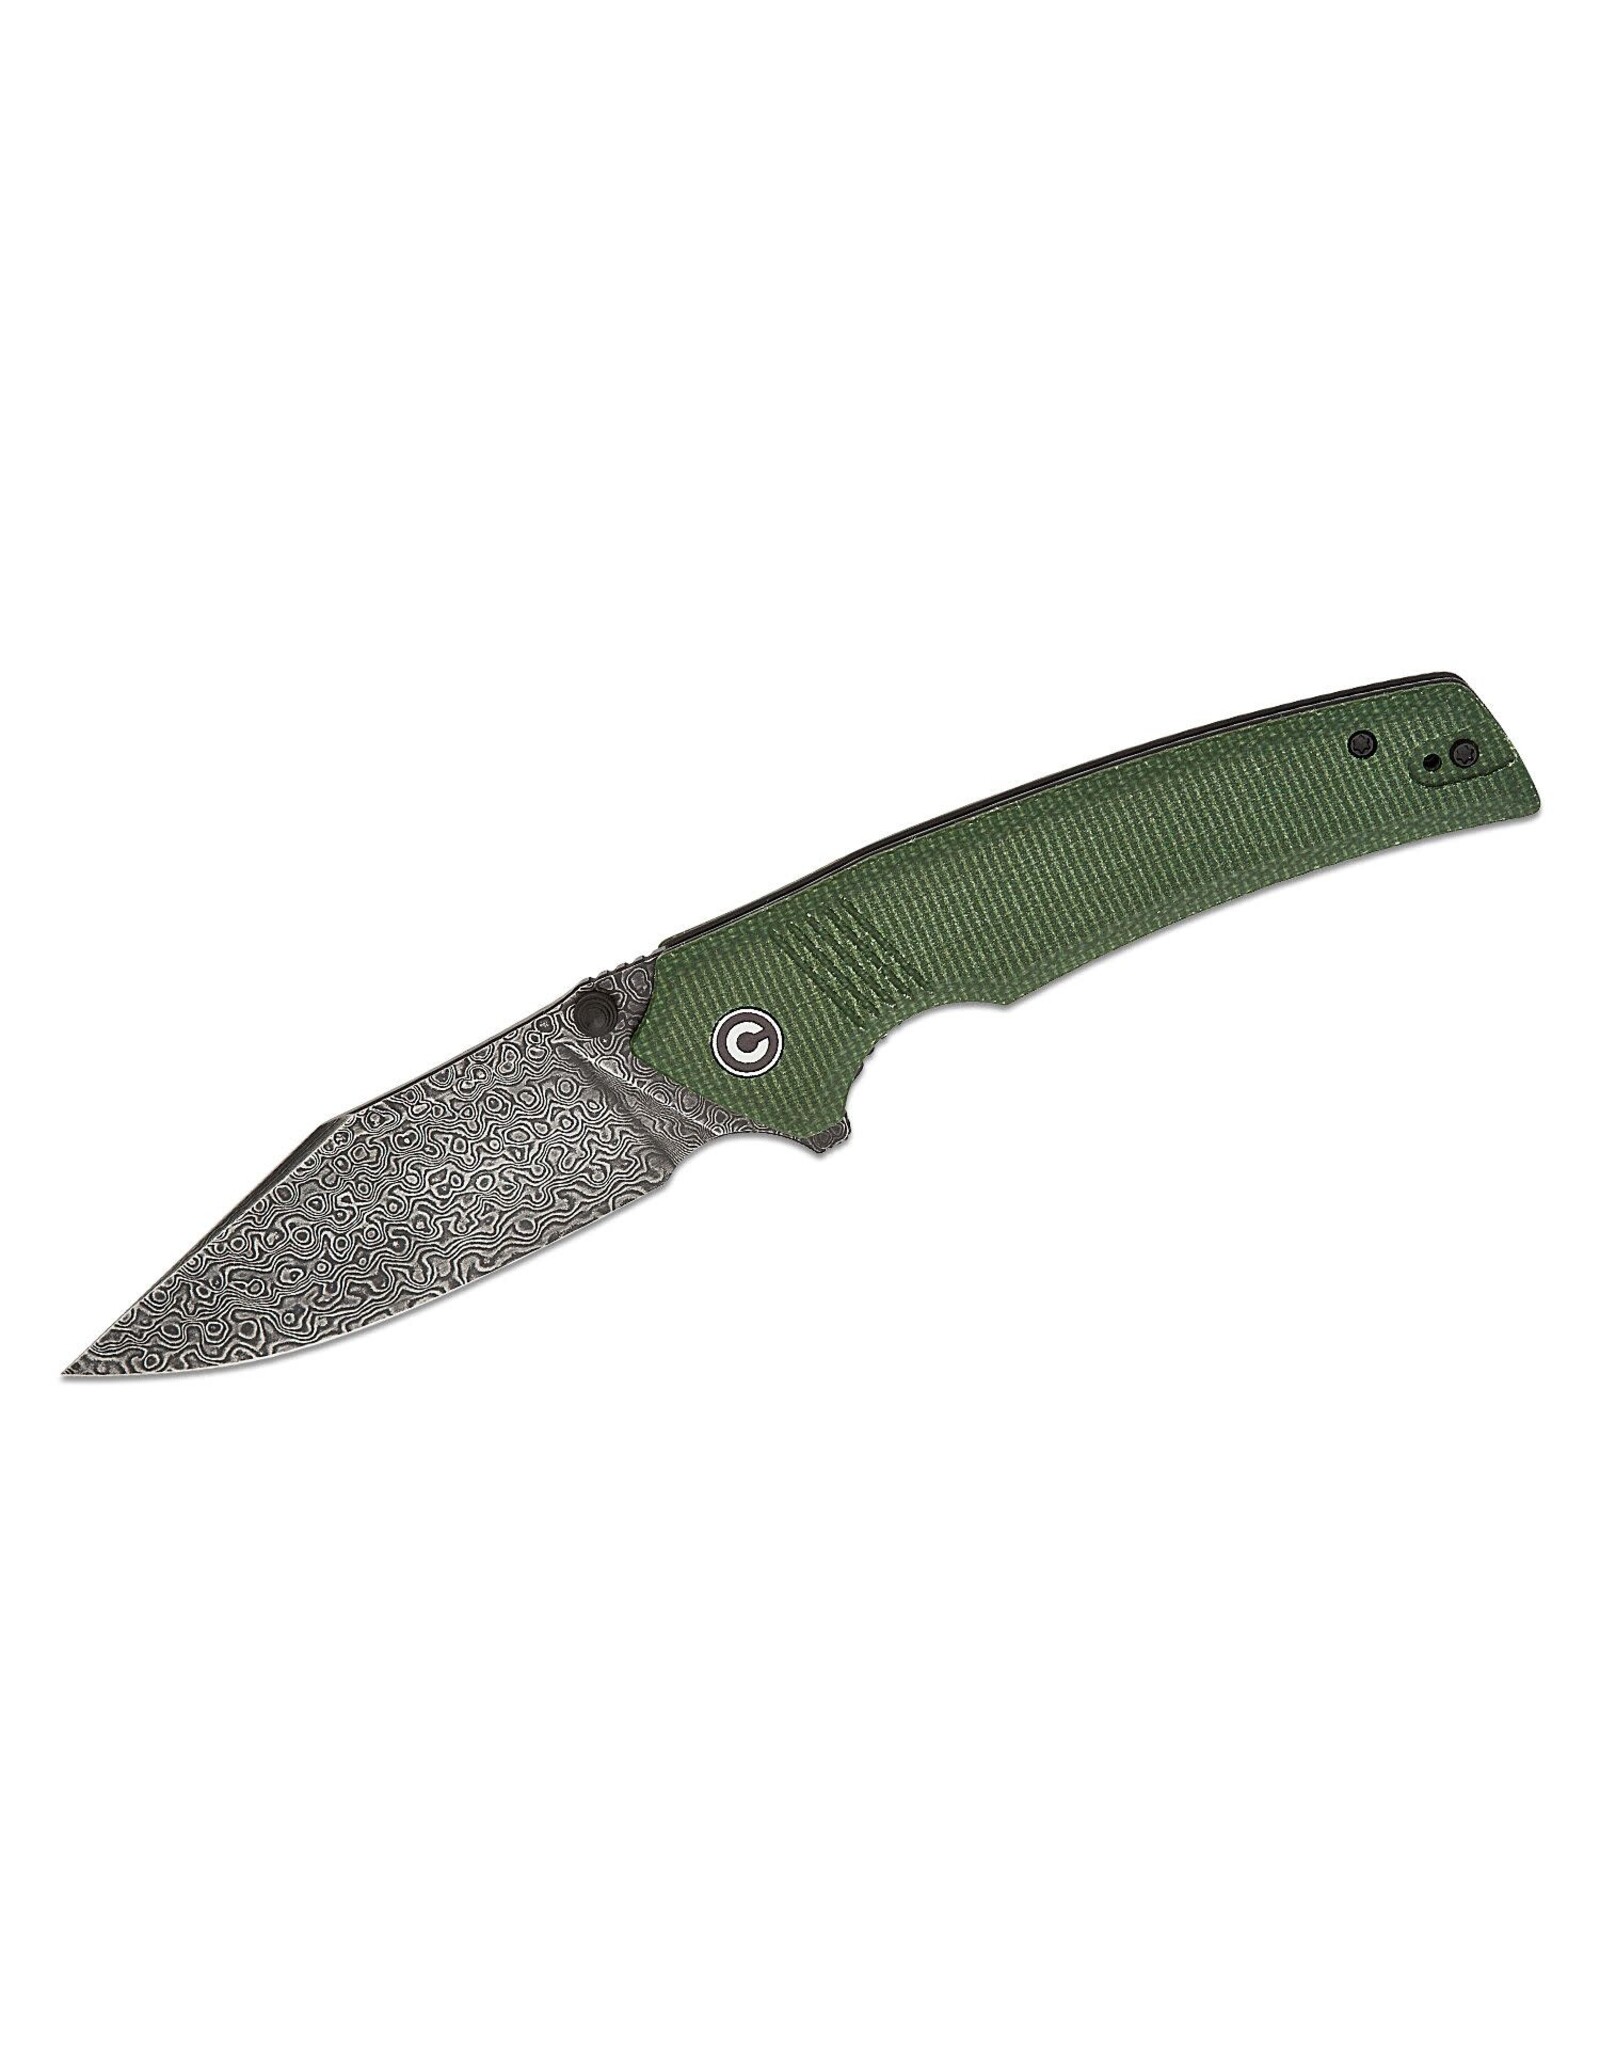 Civivi CIVIVI Knives Tranquil Liner Lock Flipper Knife 3.7" Damascus Clip Point Blade, Green Canvas Micarta Handles - C23027-DS1